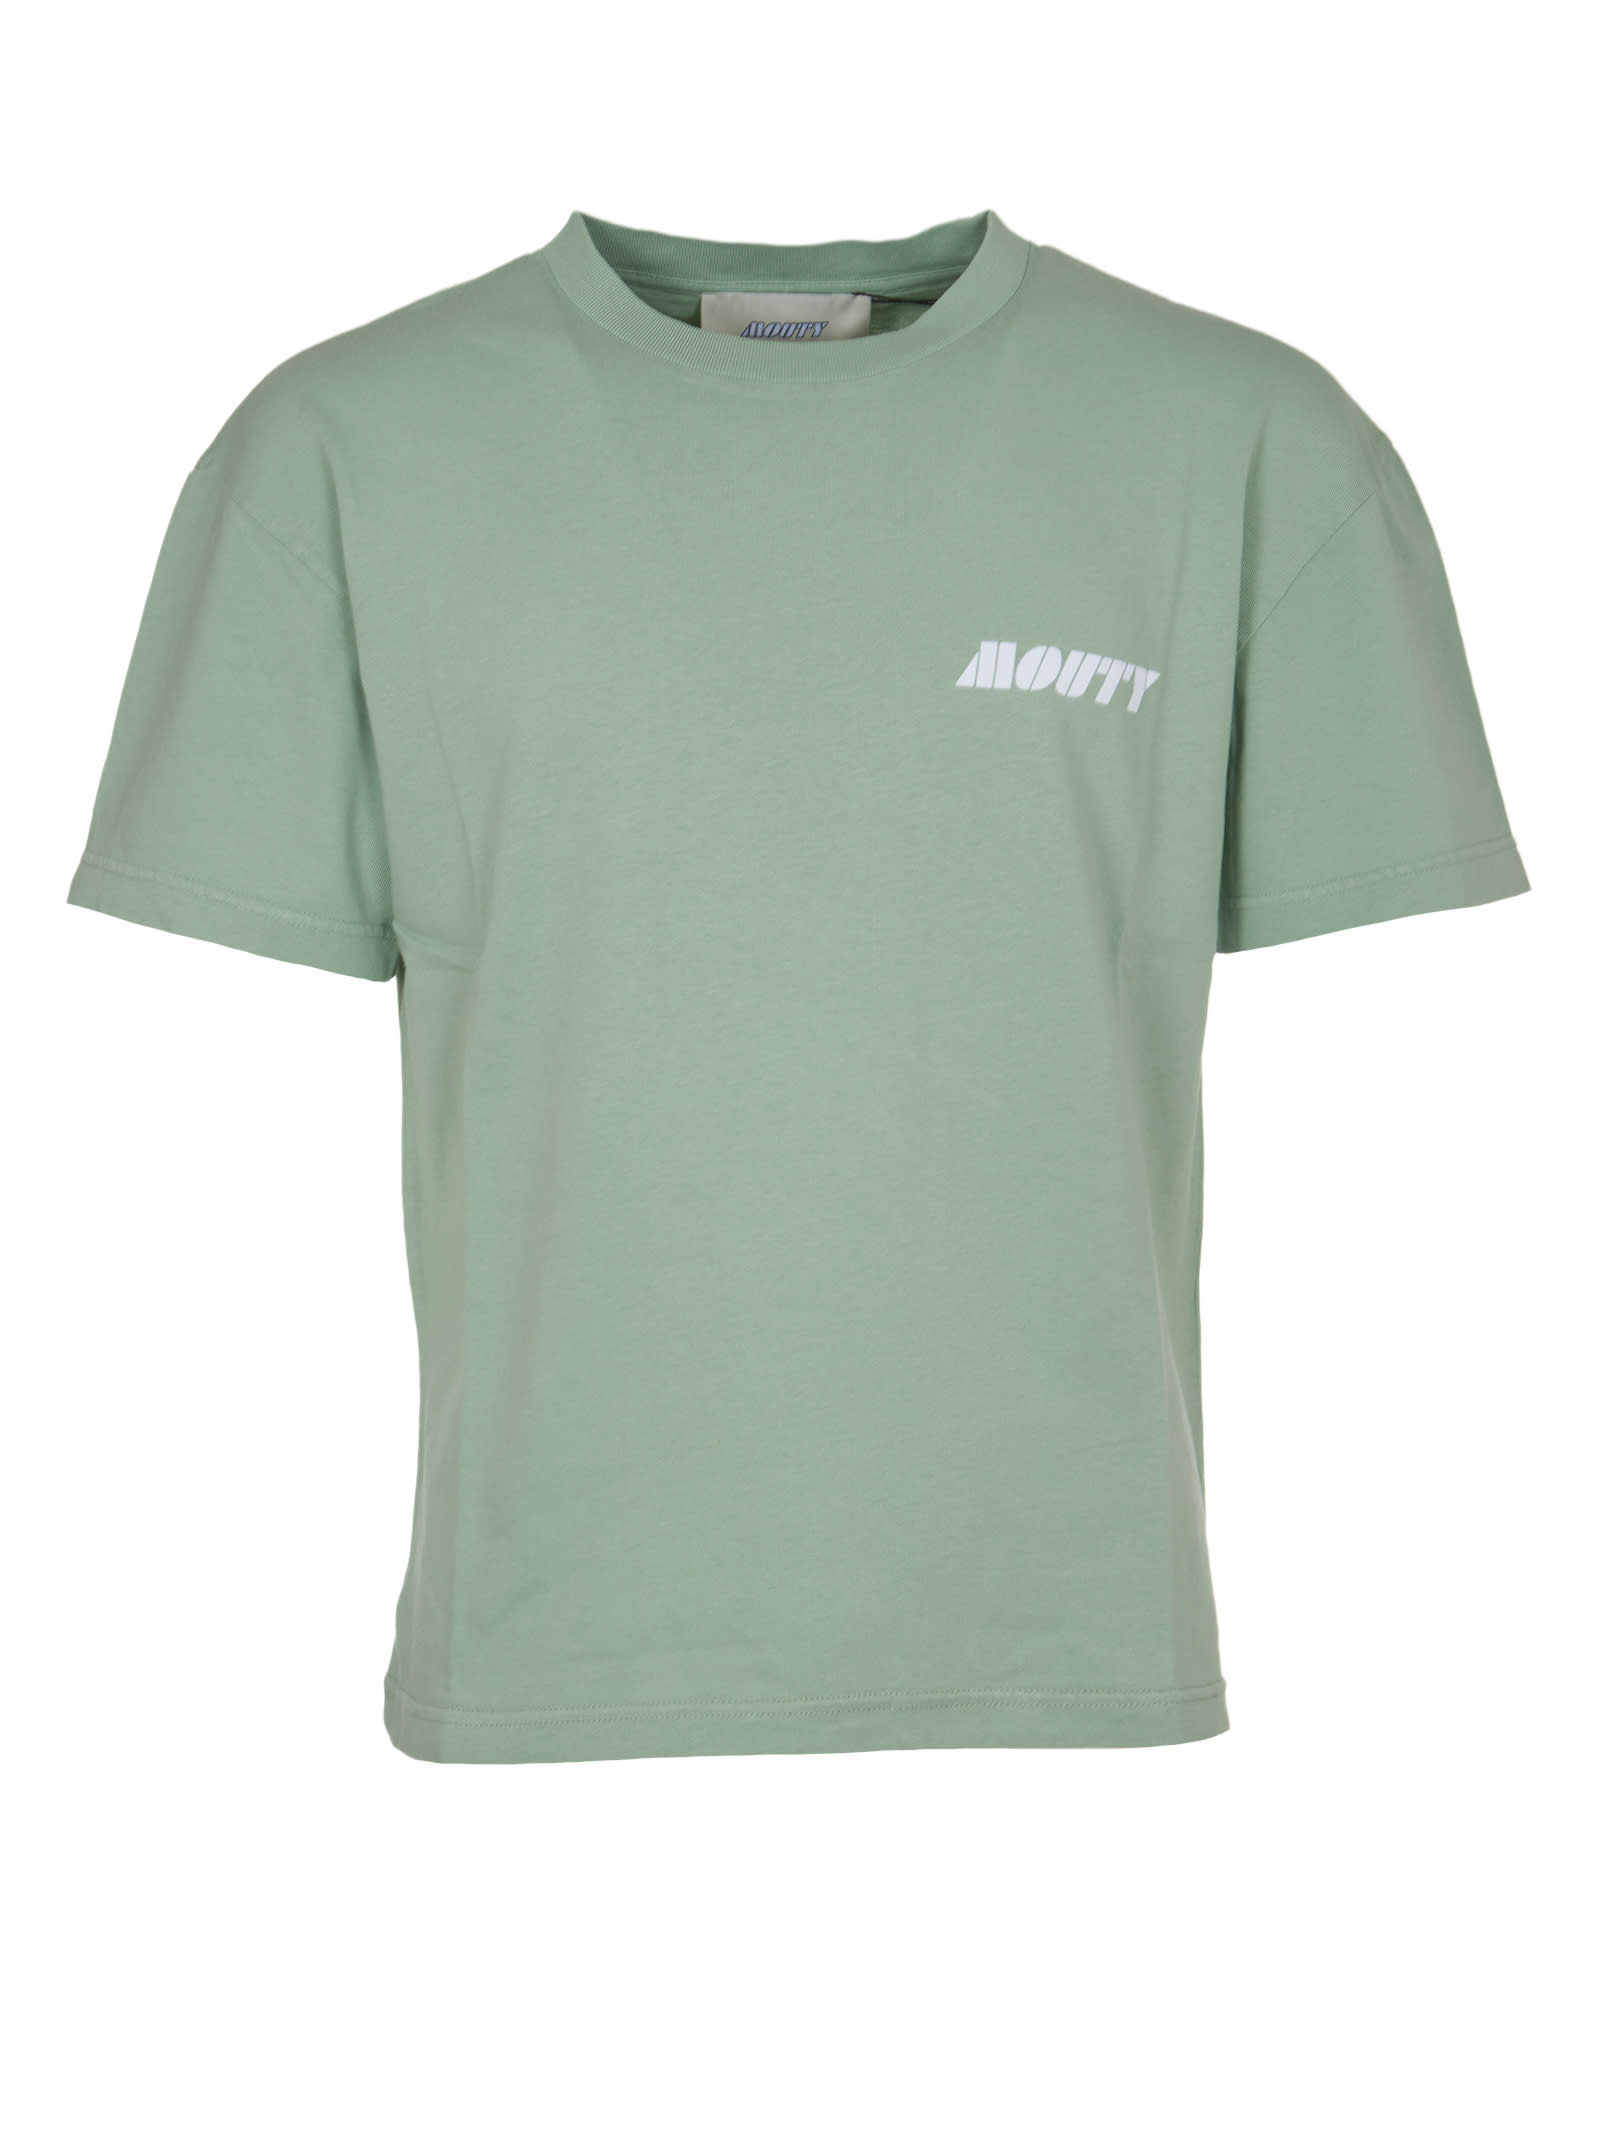 Mouty Green T-shirt